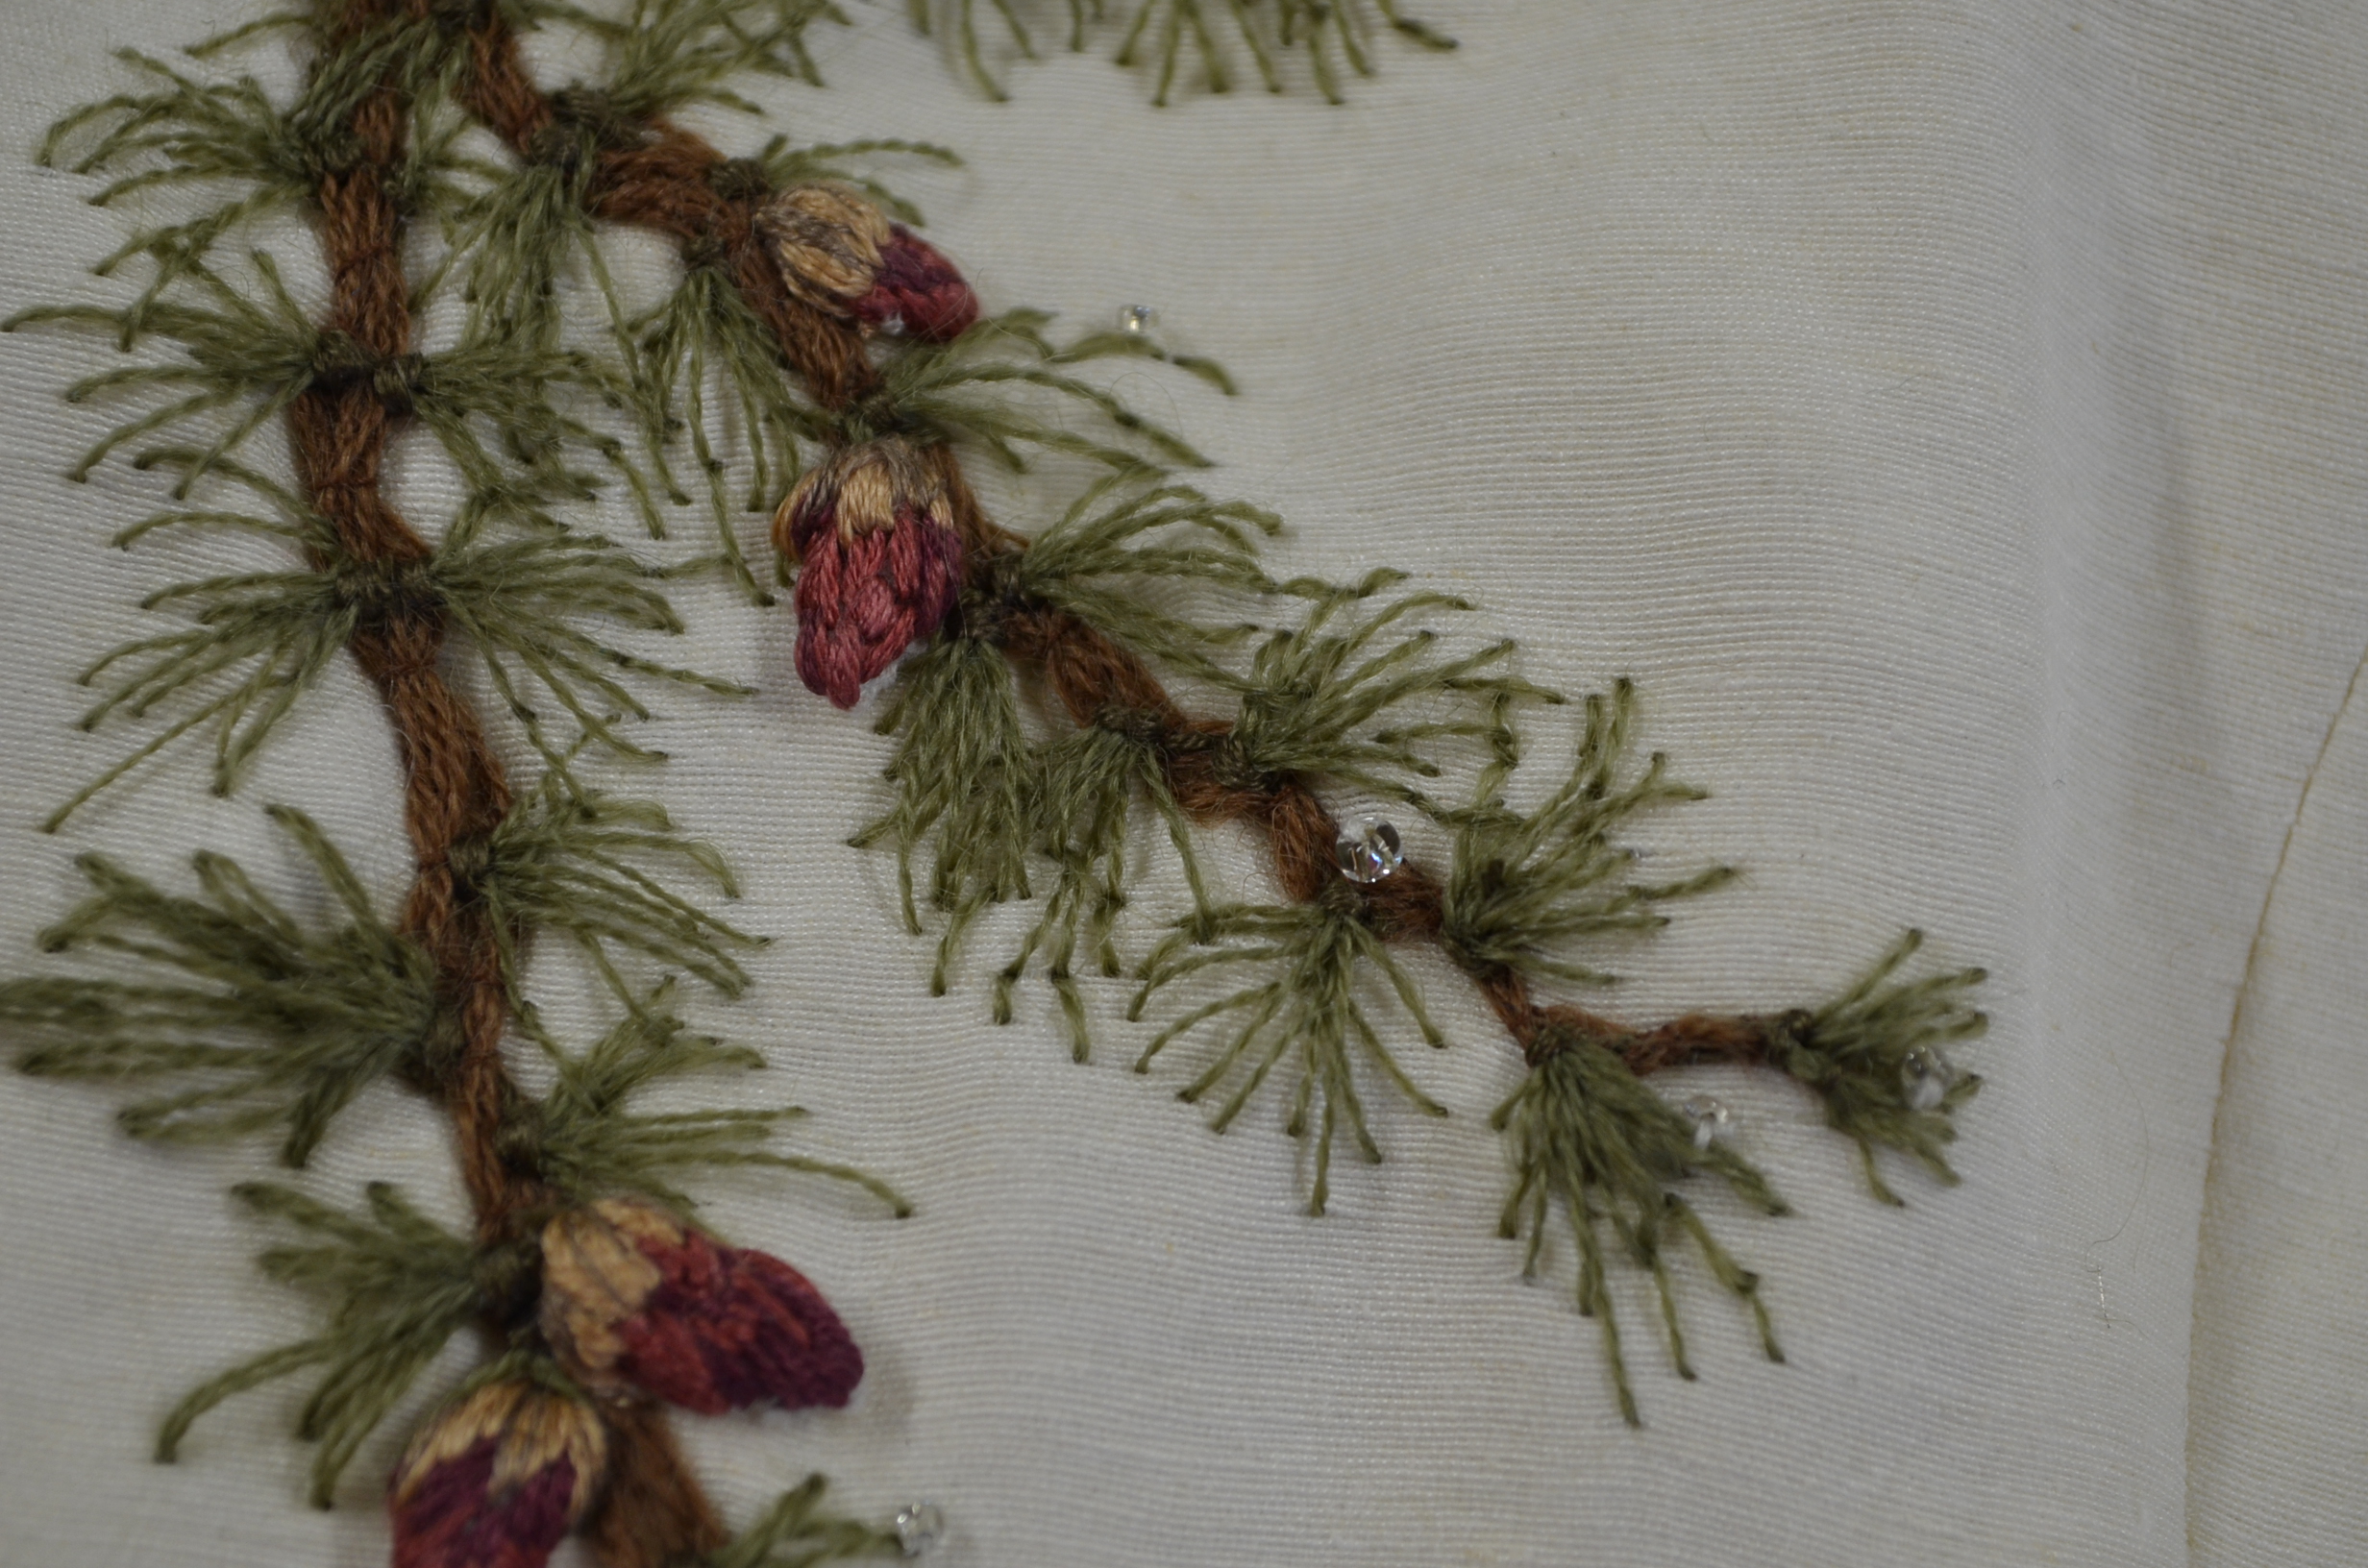 Tree embroidered wedding dress made of hemp and silk by Tara Lynn.